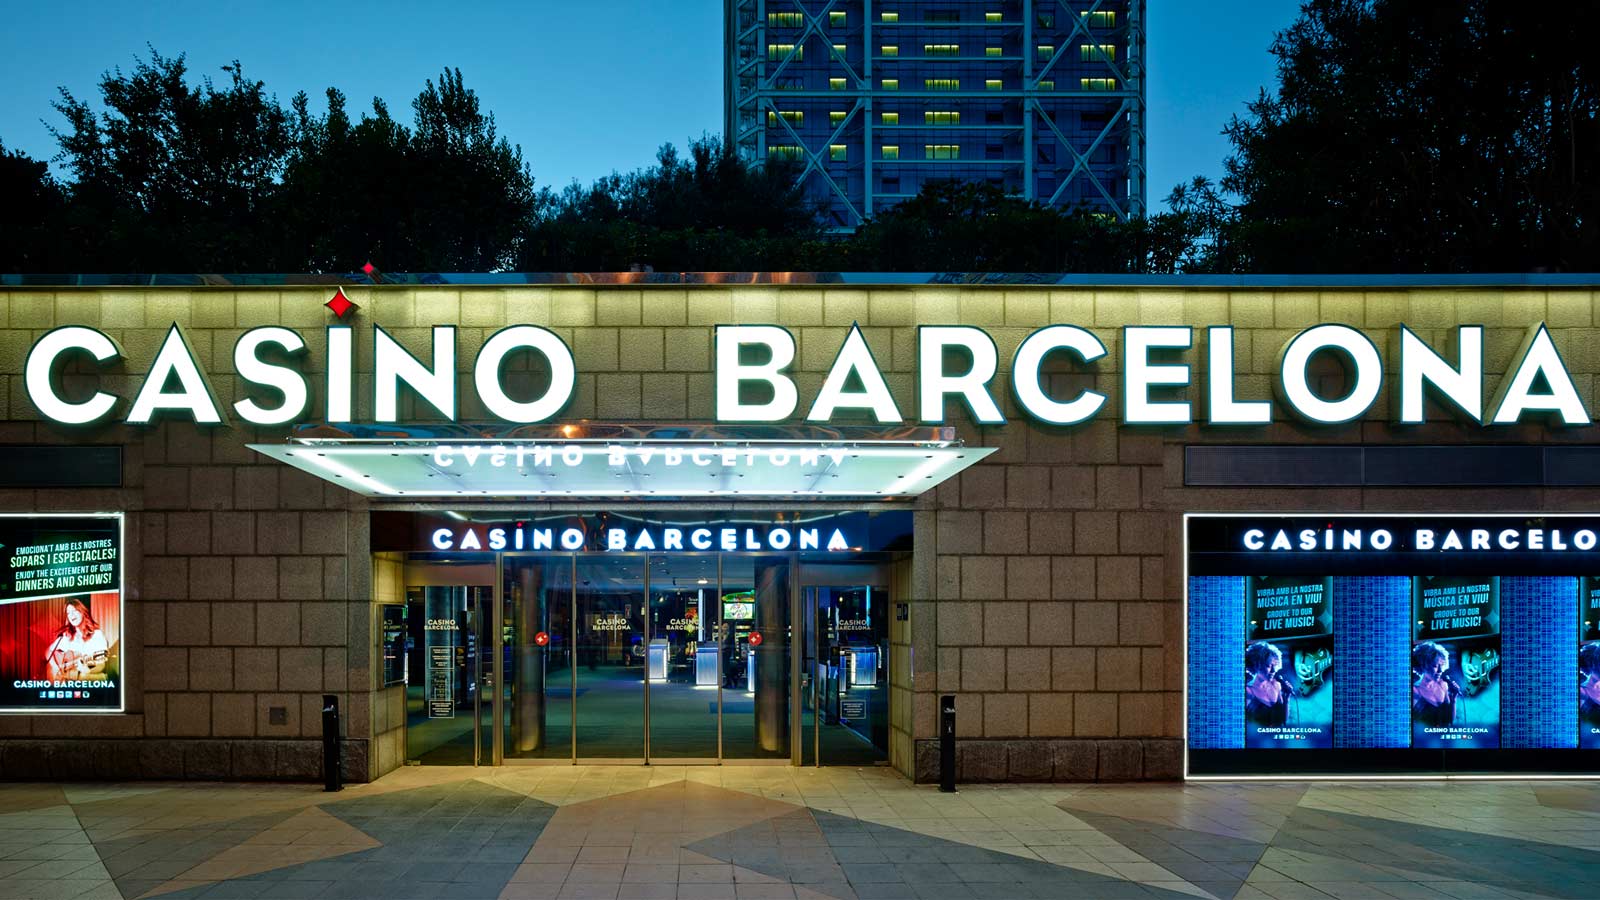 CasinoBarcelona-LedDreams-instalaciones-rotulosLed